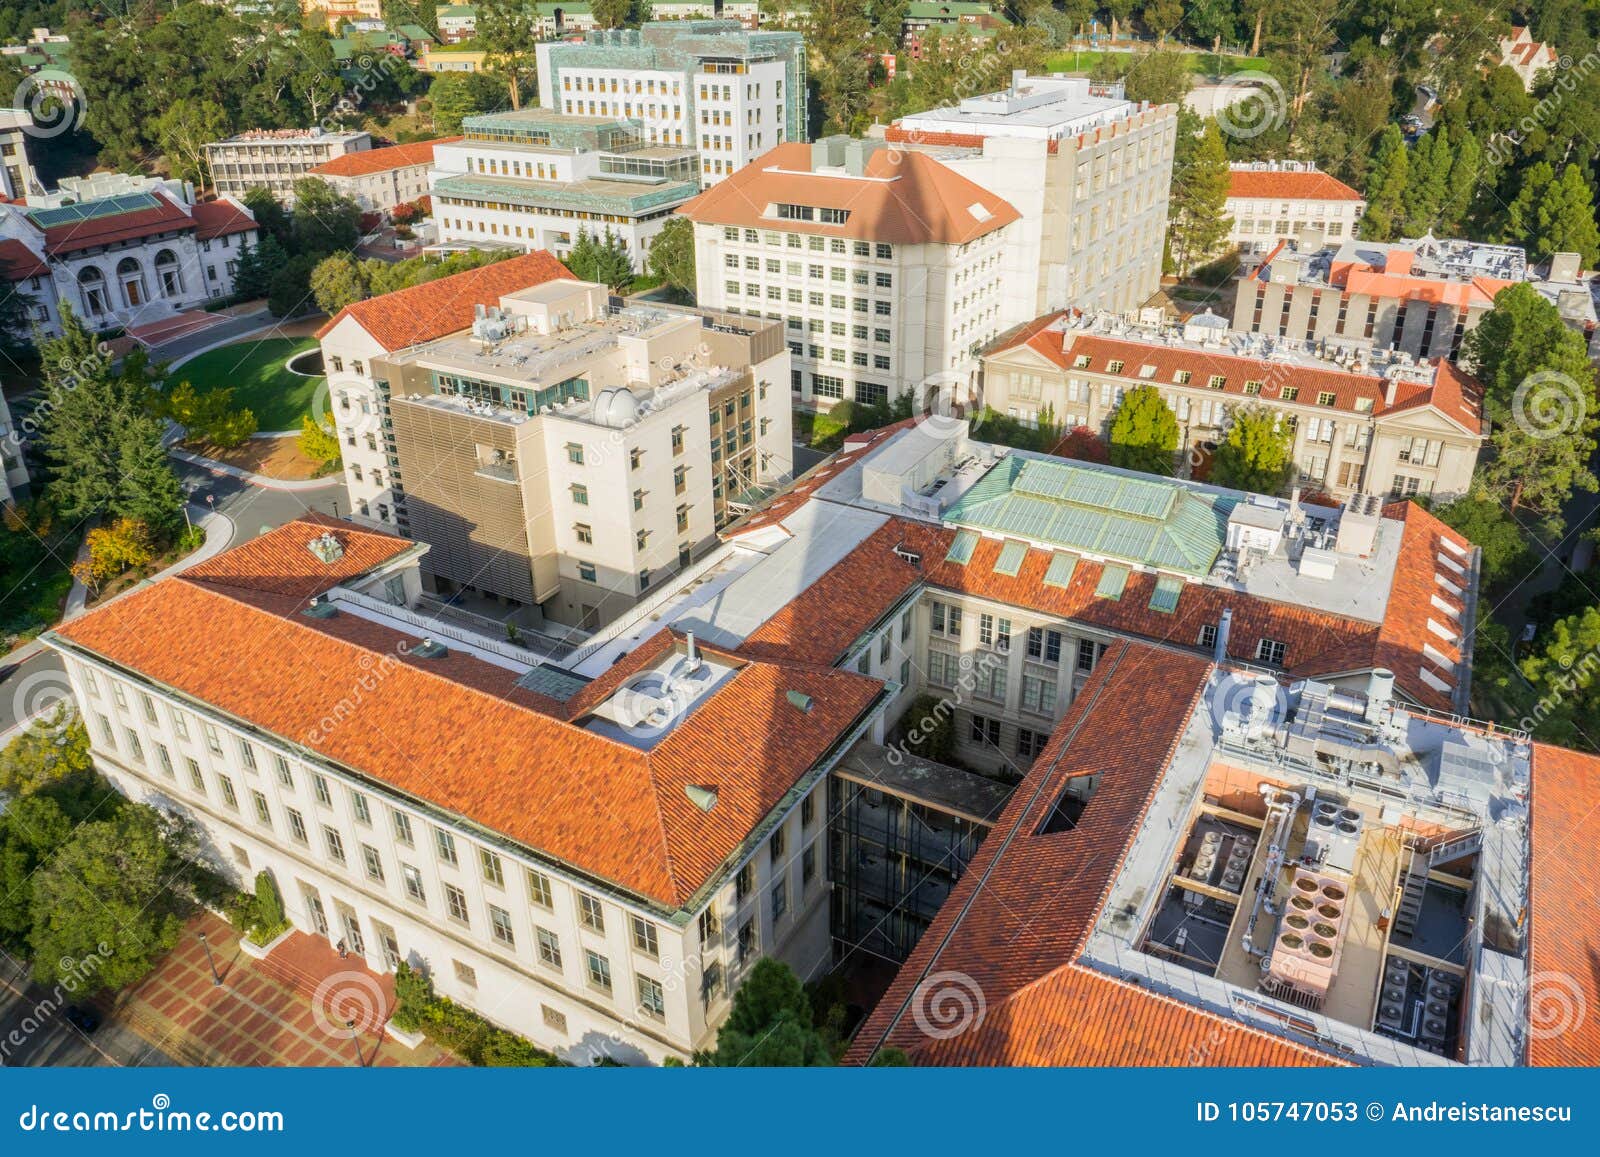 aerial view of buildings in university of california, berkeley campus